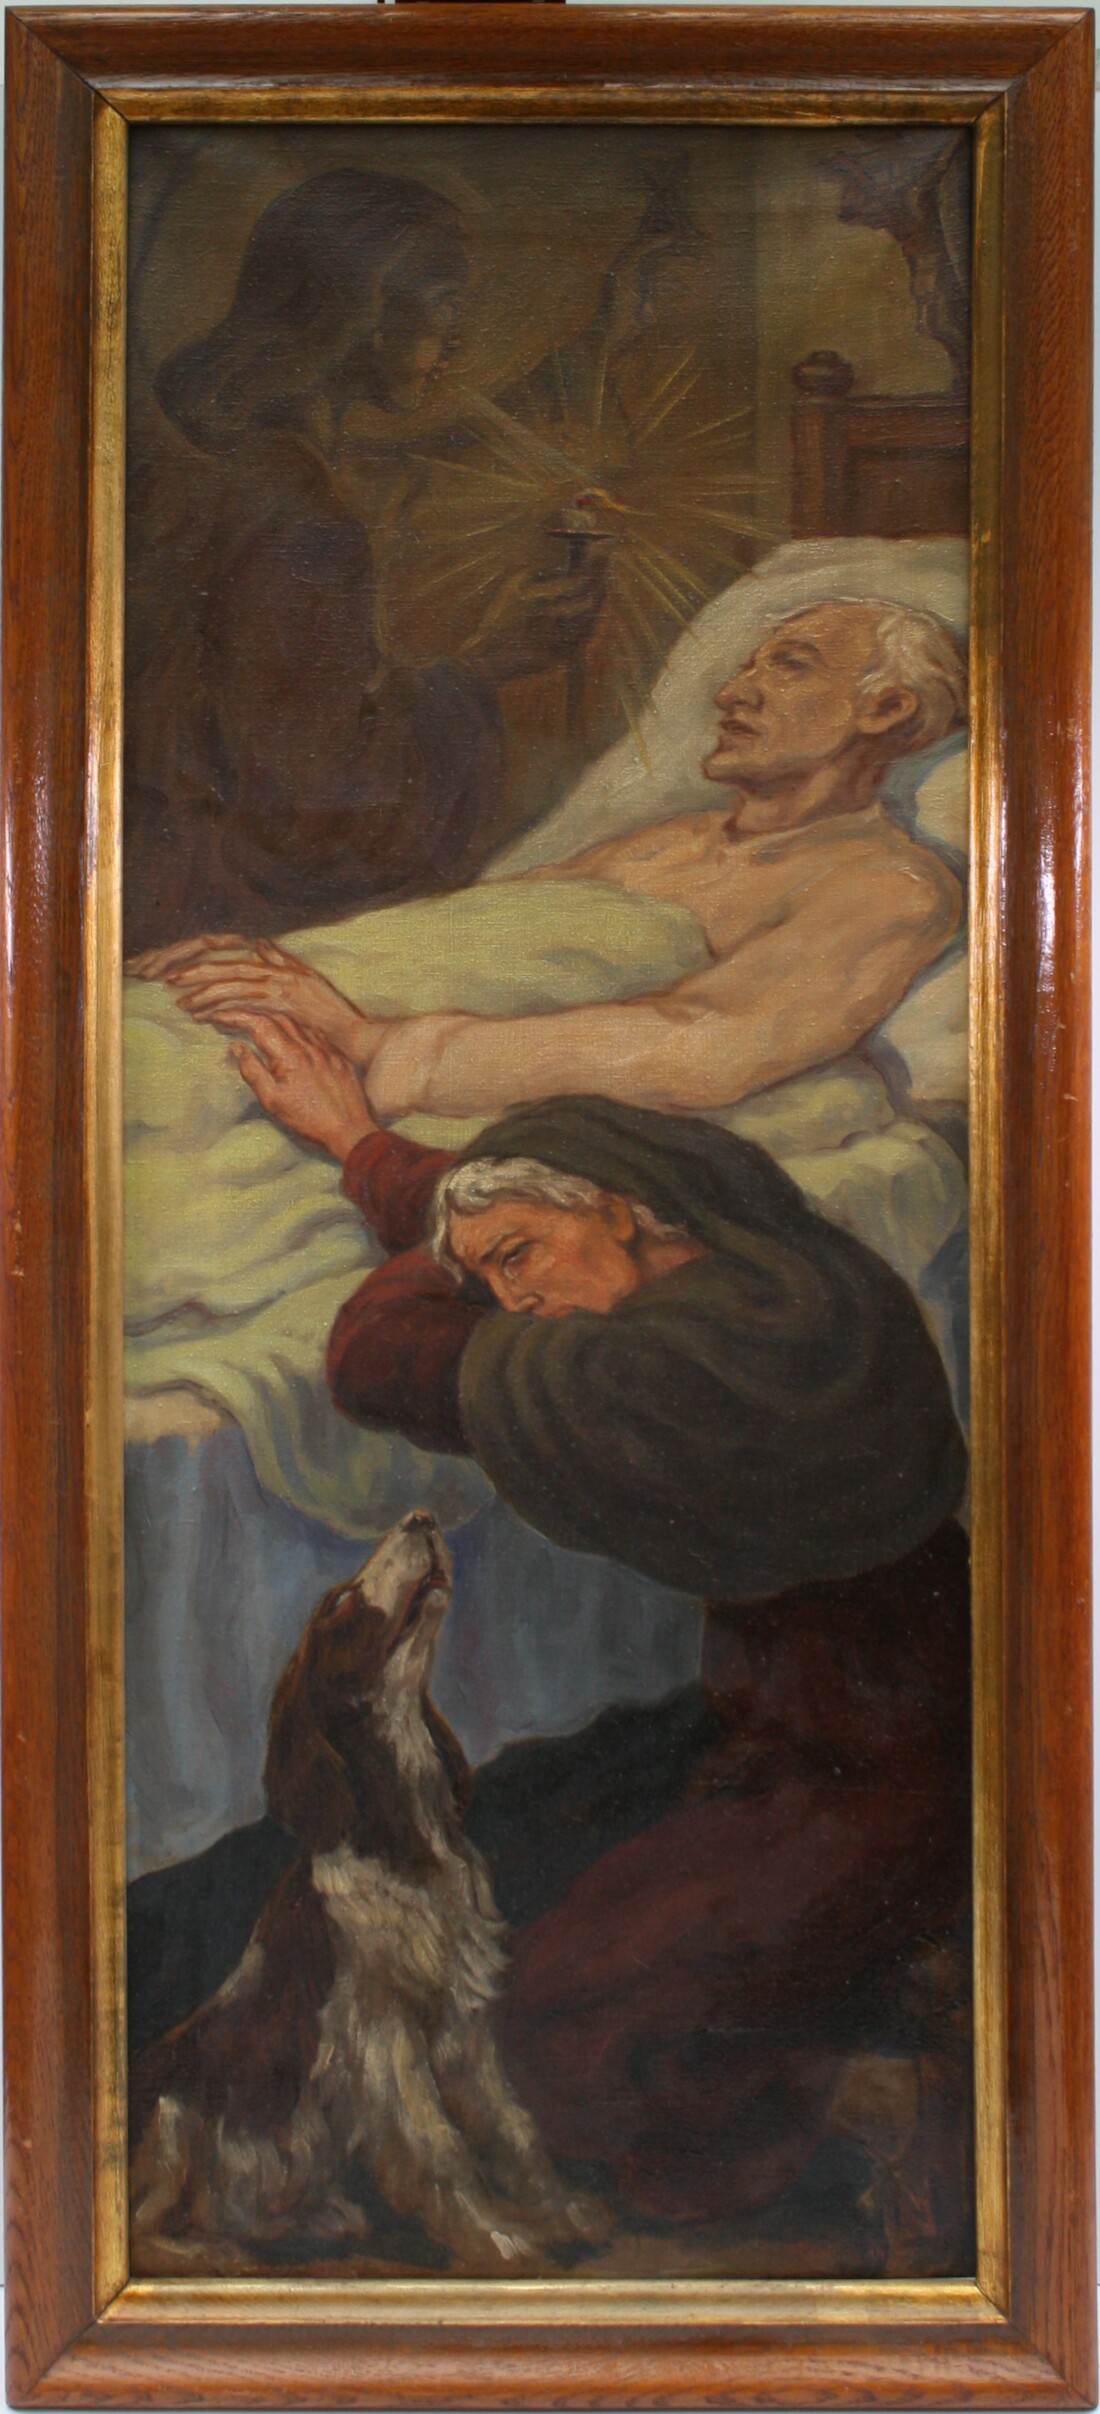 Gemälde: "Tod" (Serie Lebensalter) (Drilandmuseum CC BY-NC-SA)